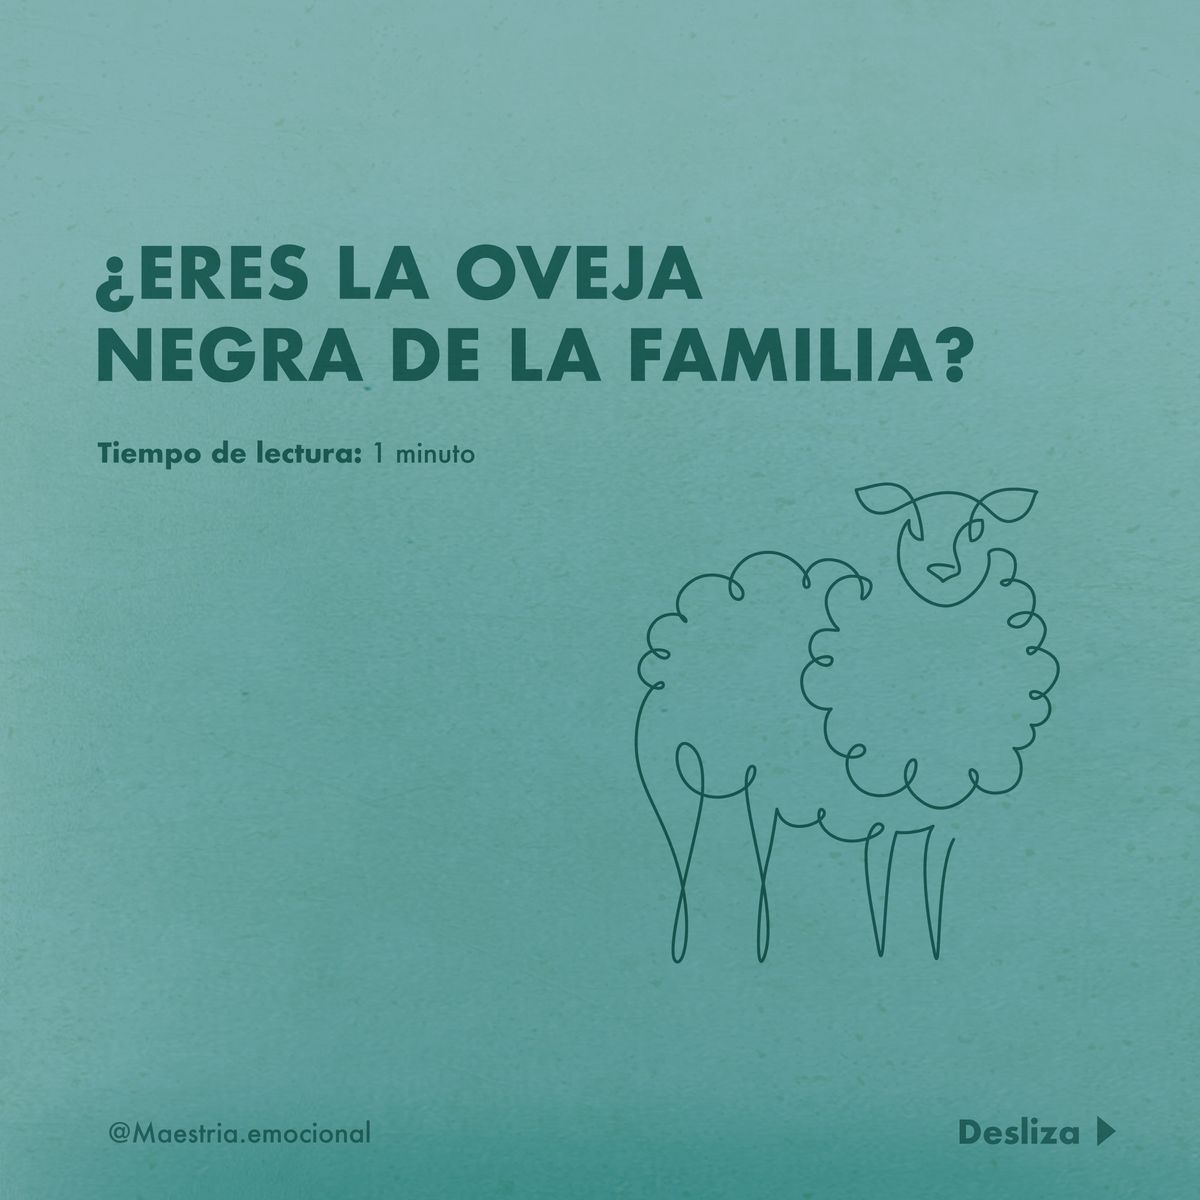 ¿Eres la oveja negra de la familia?